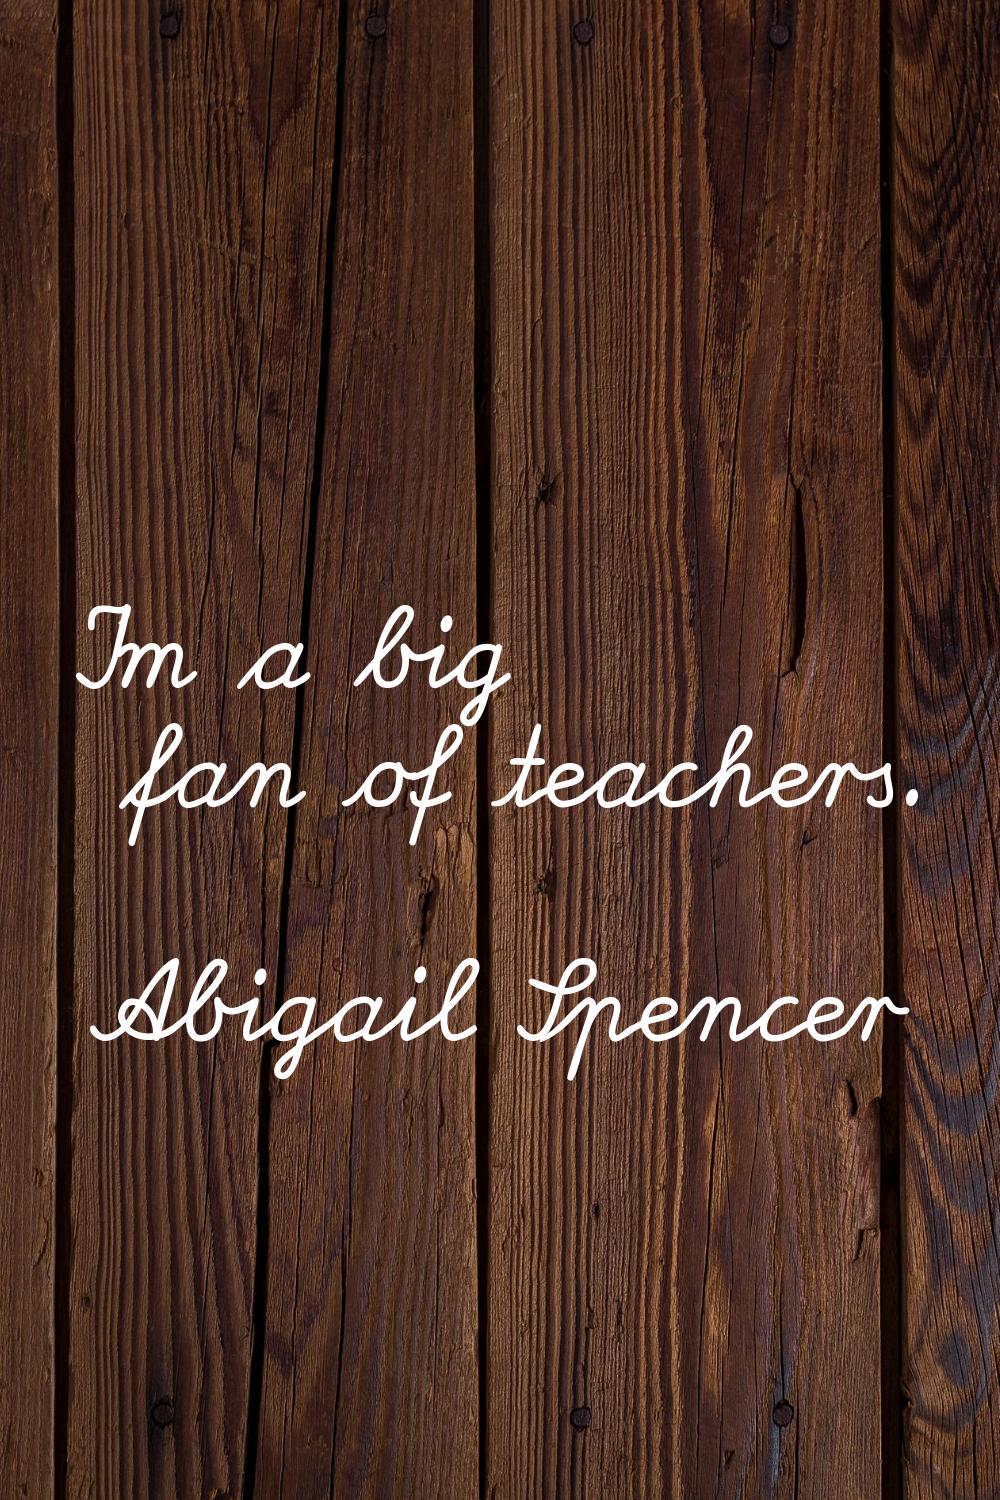 I'm a big fan of teachers.